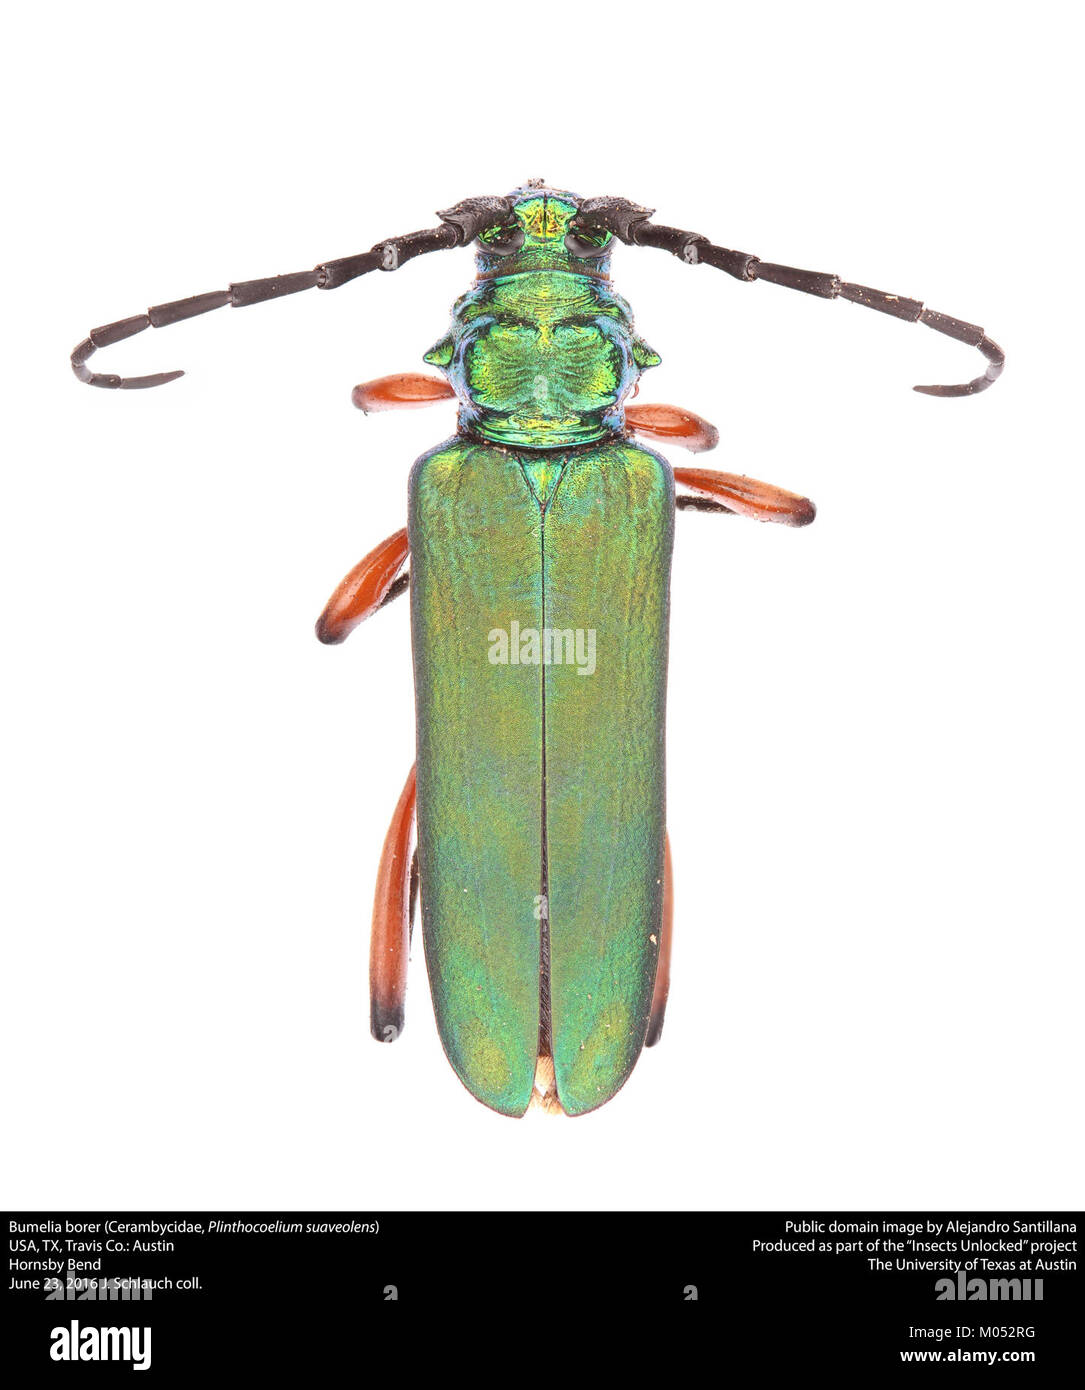 Bumelia borer (Cerambycidae, Plinthocoelium suaveolens) (27453775293) Stock Photo